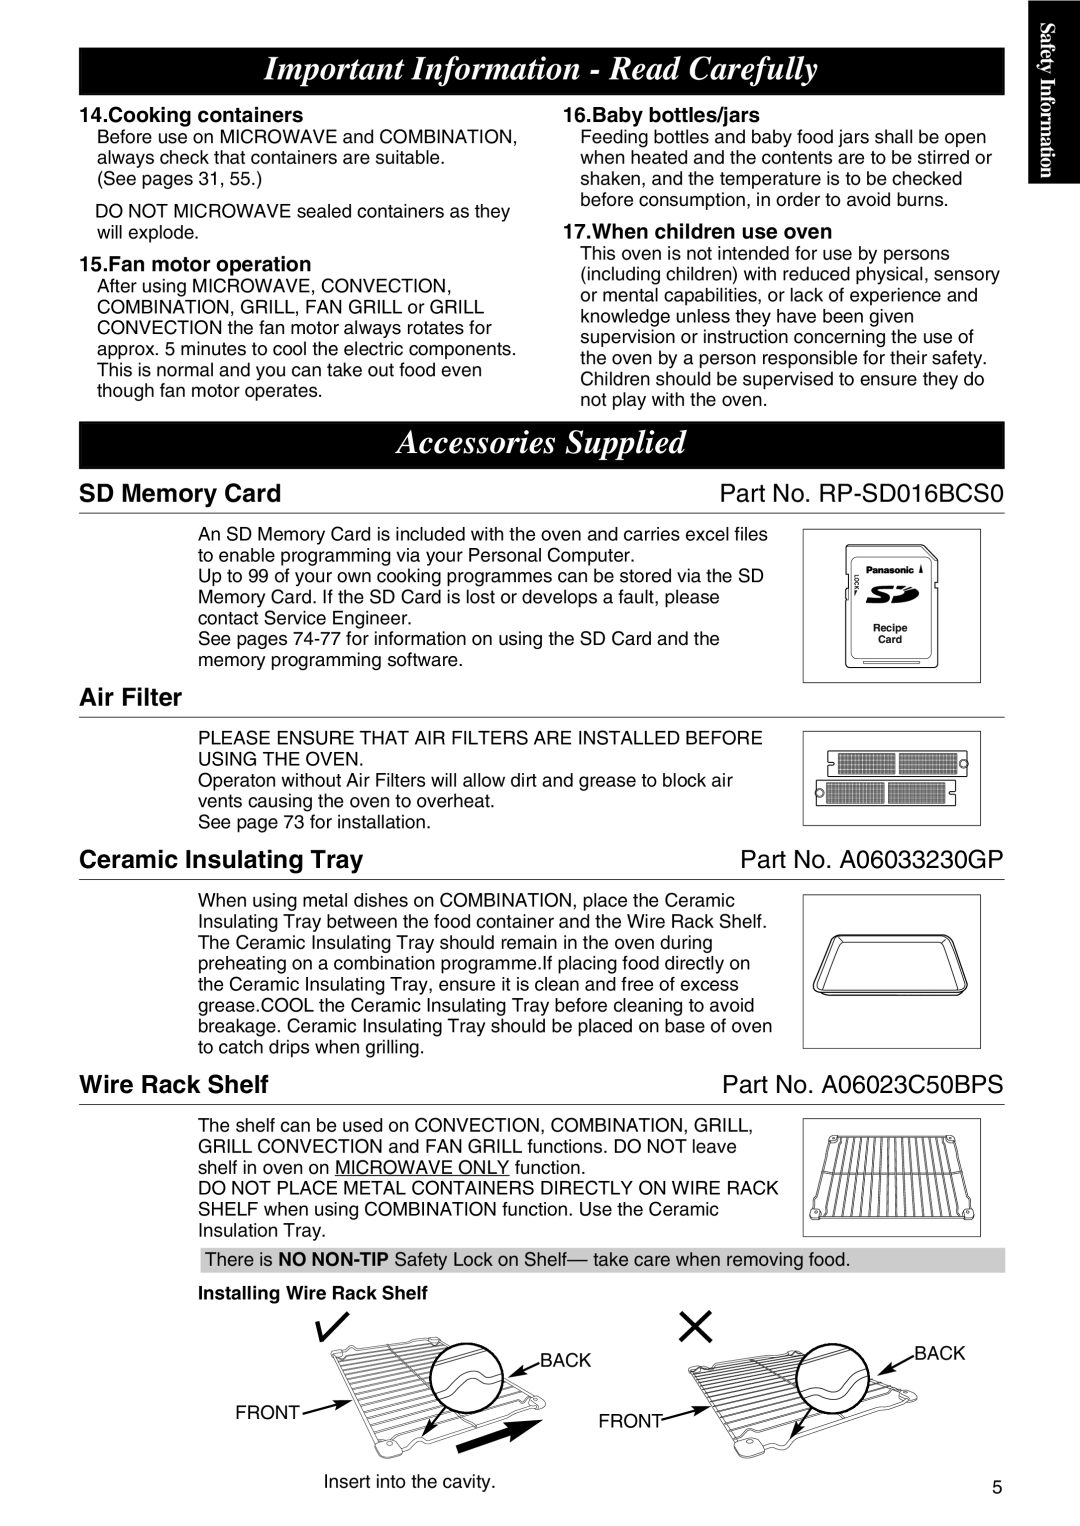 Panasonic NE-C1275 Accessories Supplied, SD Memory Card, Part No. RP-SD016BCS0, Air Filter, Ceramic Insulating Tray 